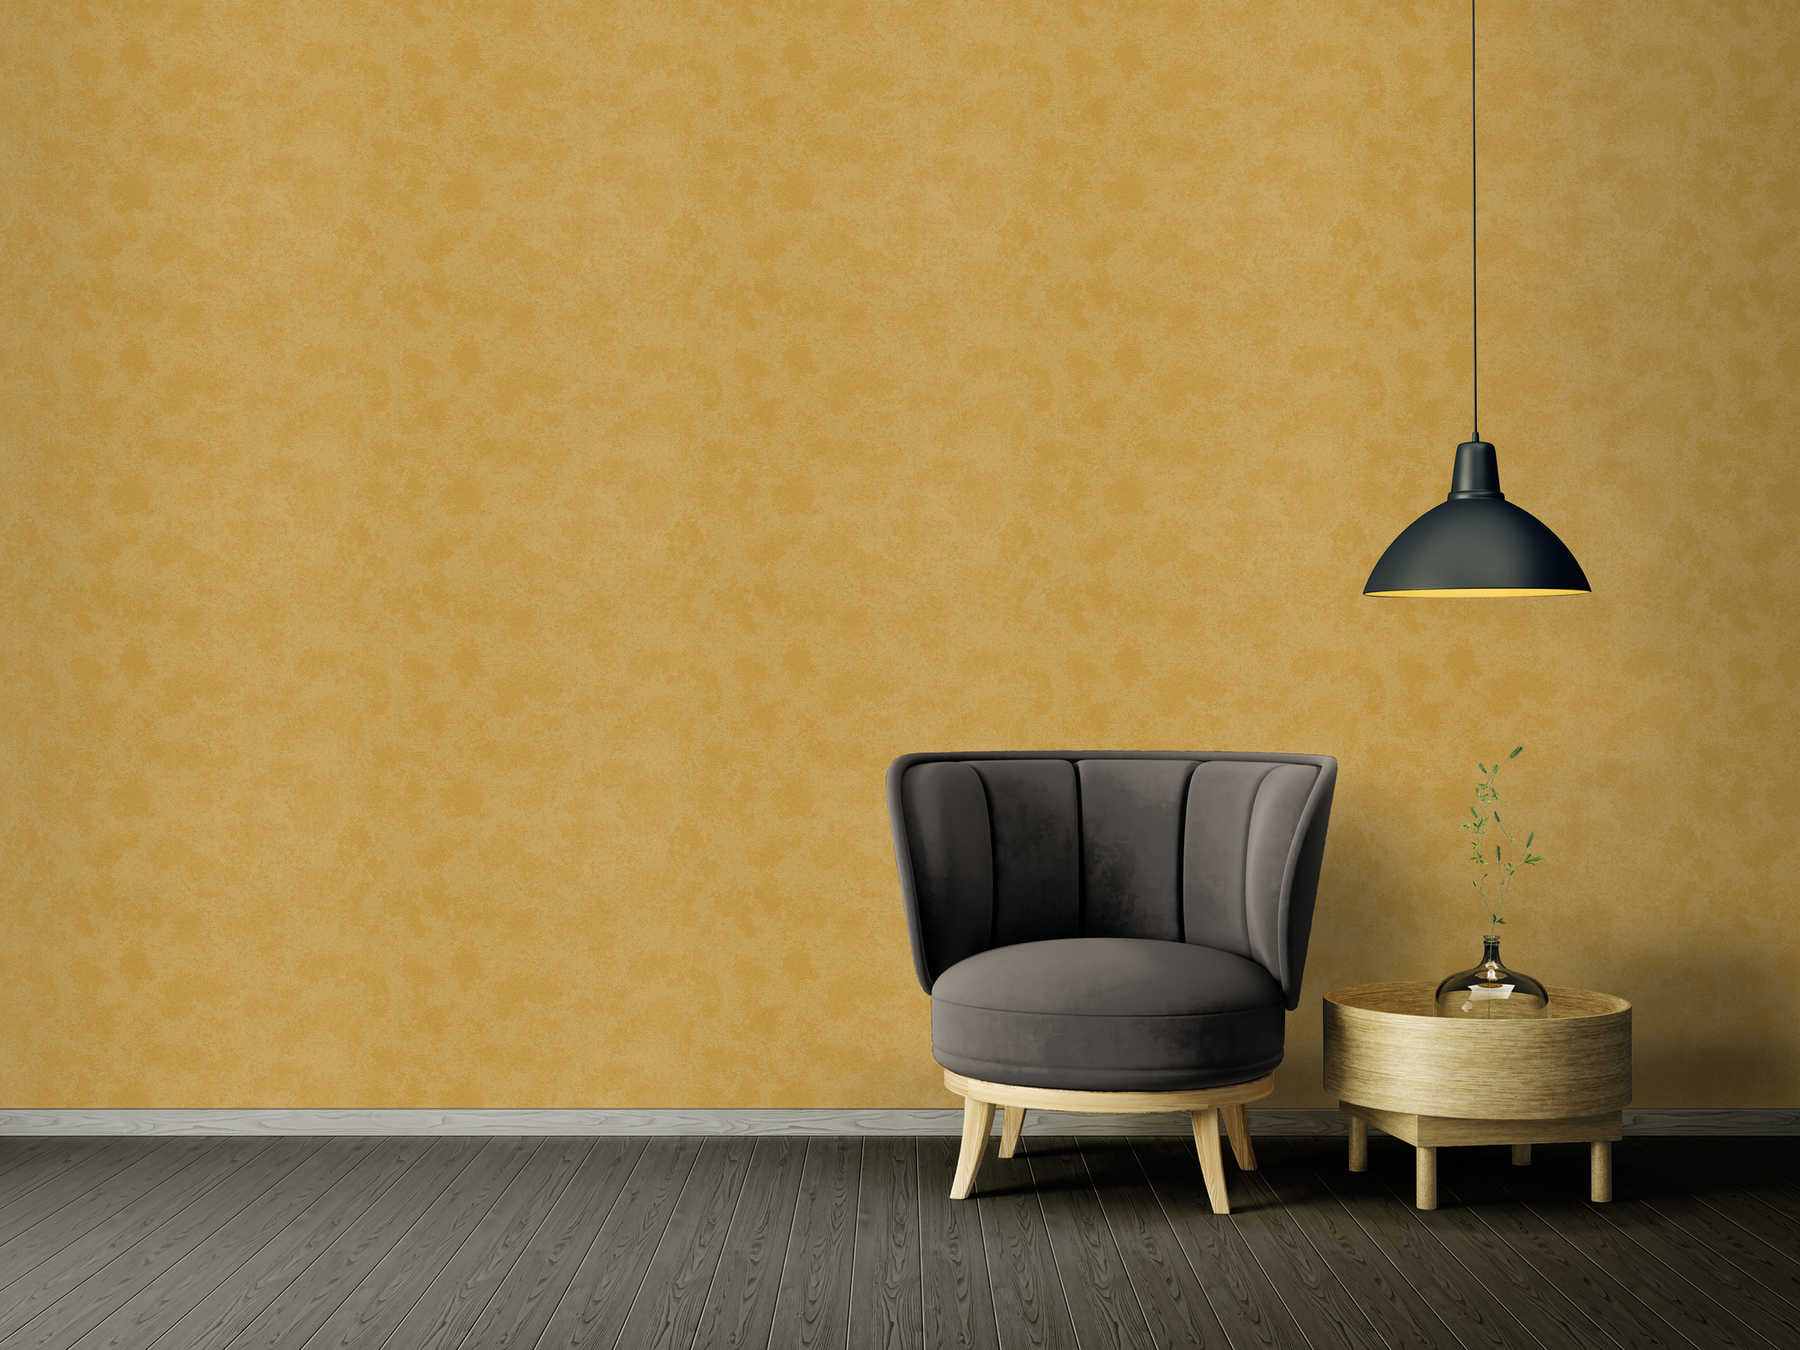             VERSACE behangpapier met gedetailleerd ornament patroon - goud, geel
        